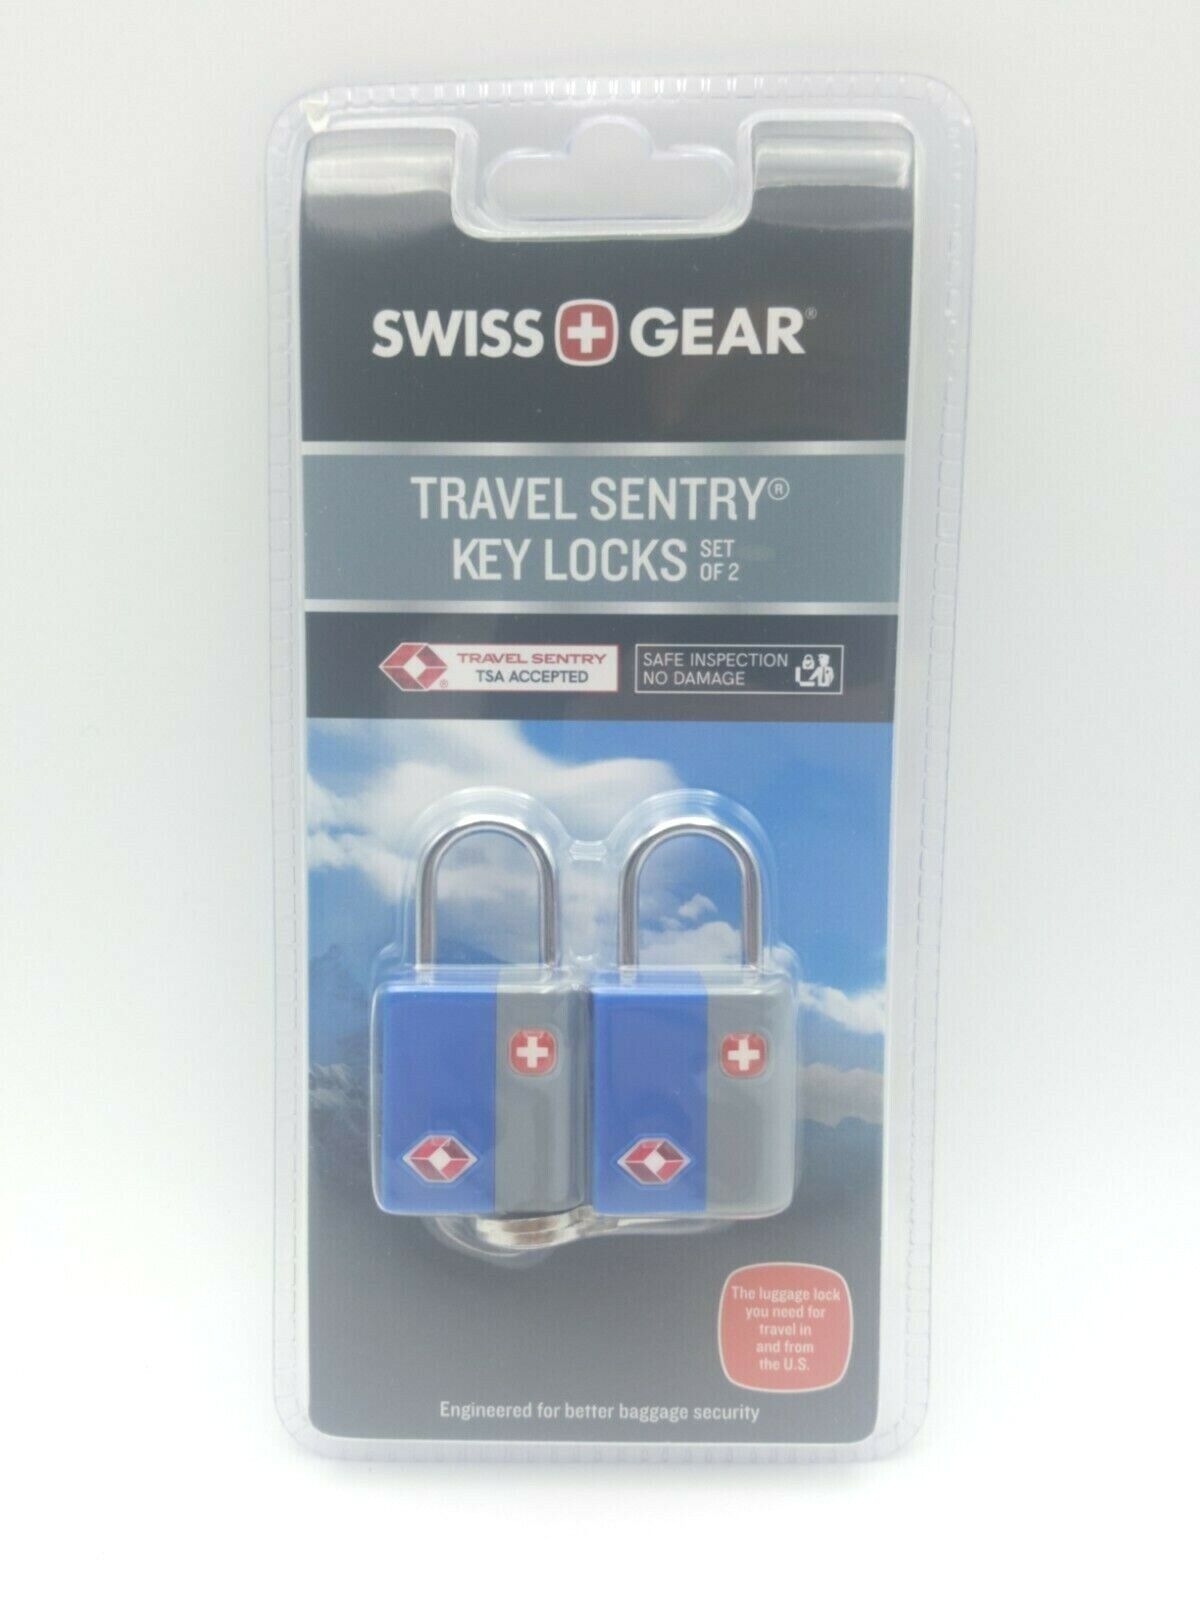 Swissgear Tsa Approved Travel Sentry Luggage 2 Mini Locks & 2 Keys, New